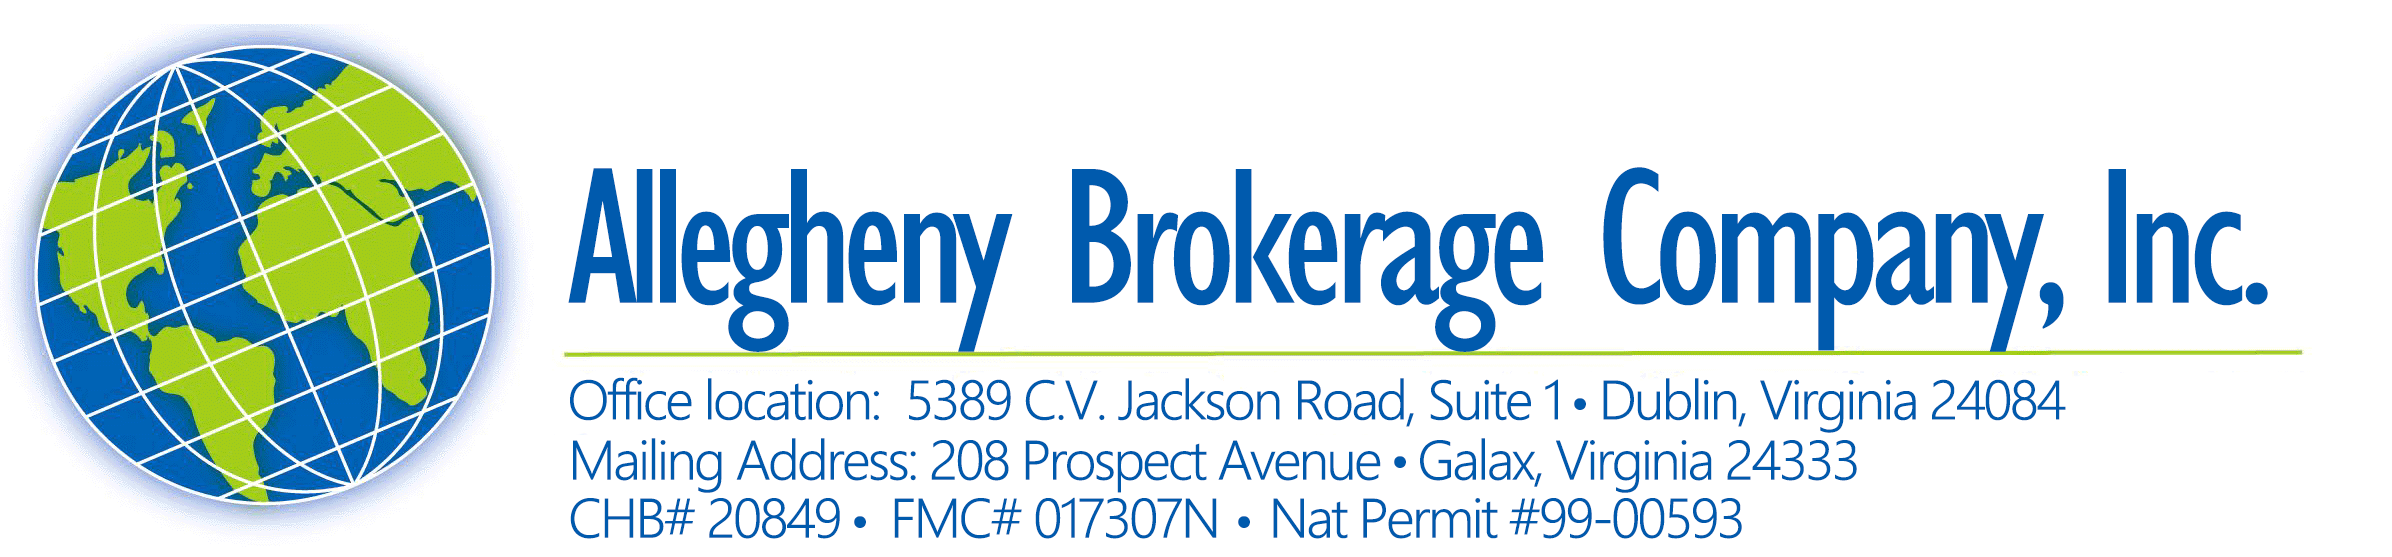 Allegheny Brokerage Company, Inc.